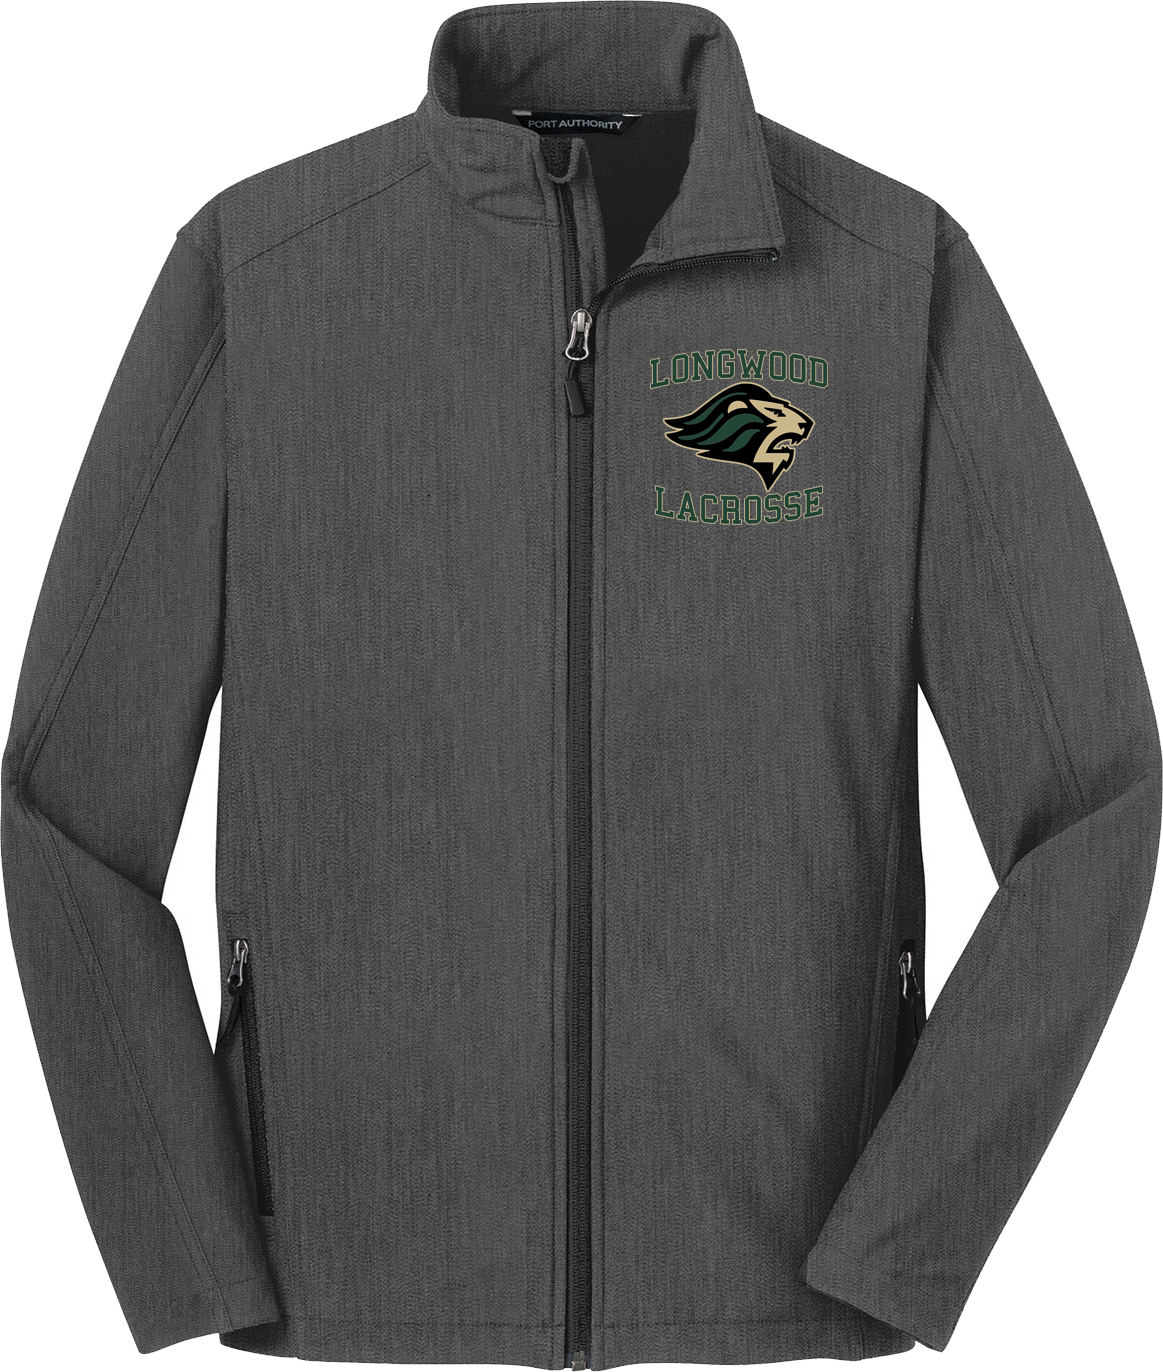 Longwood Lacrosse Charcoal Soft Shell Jacket